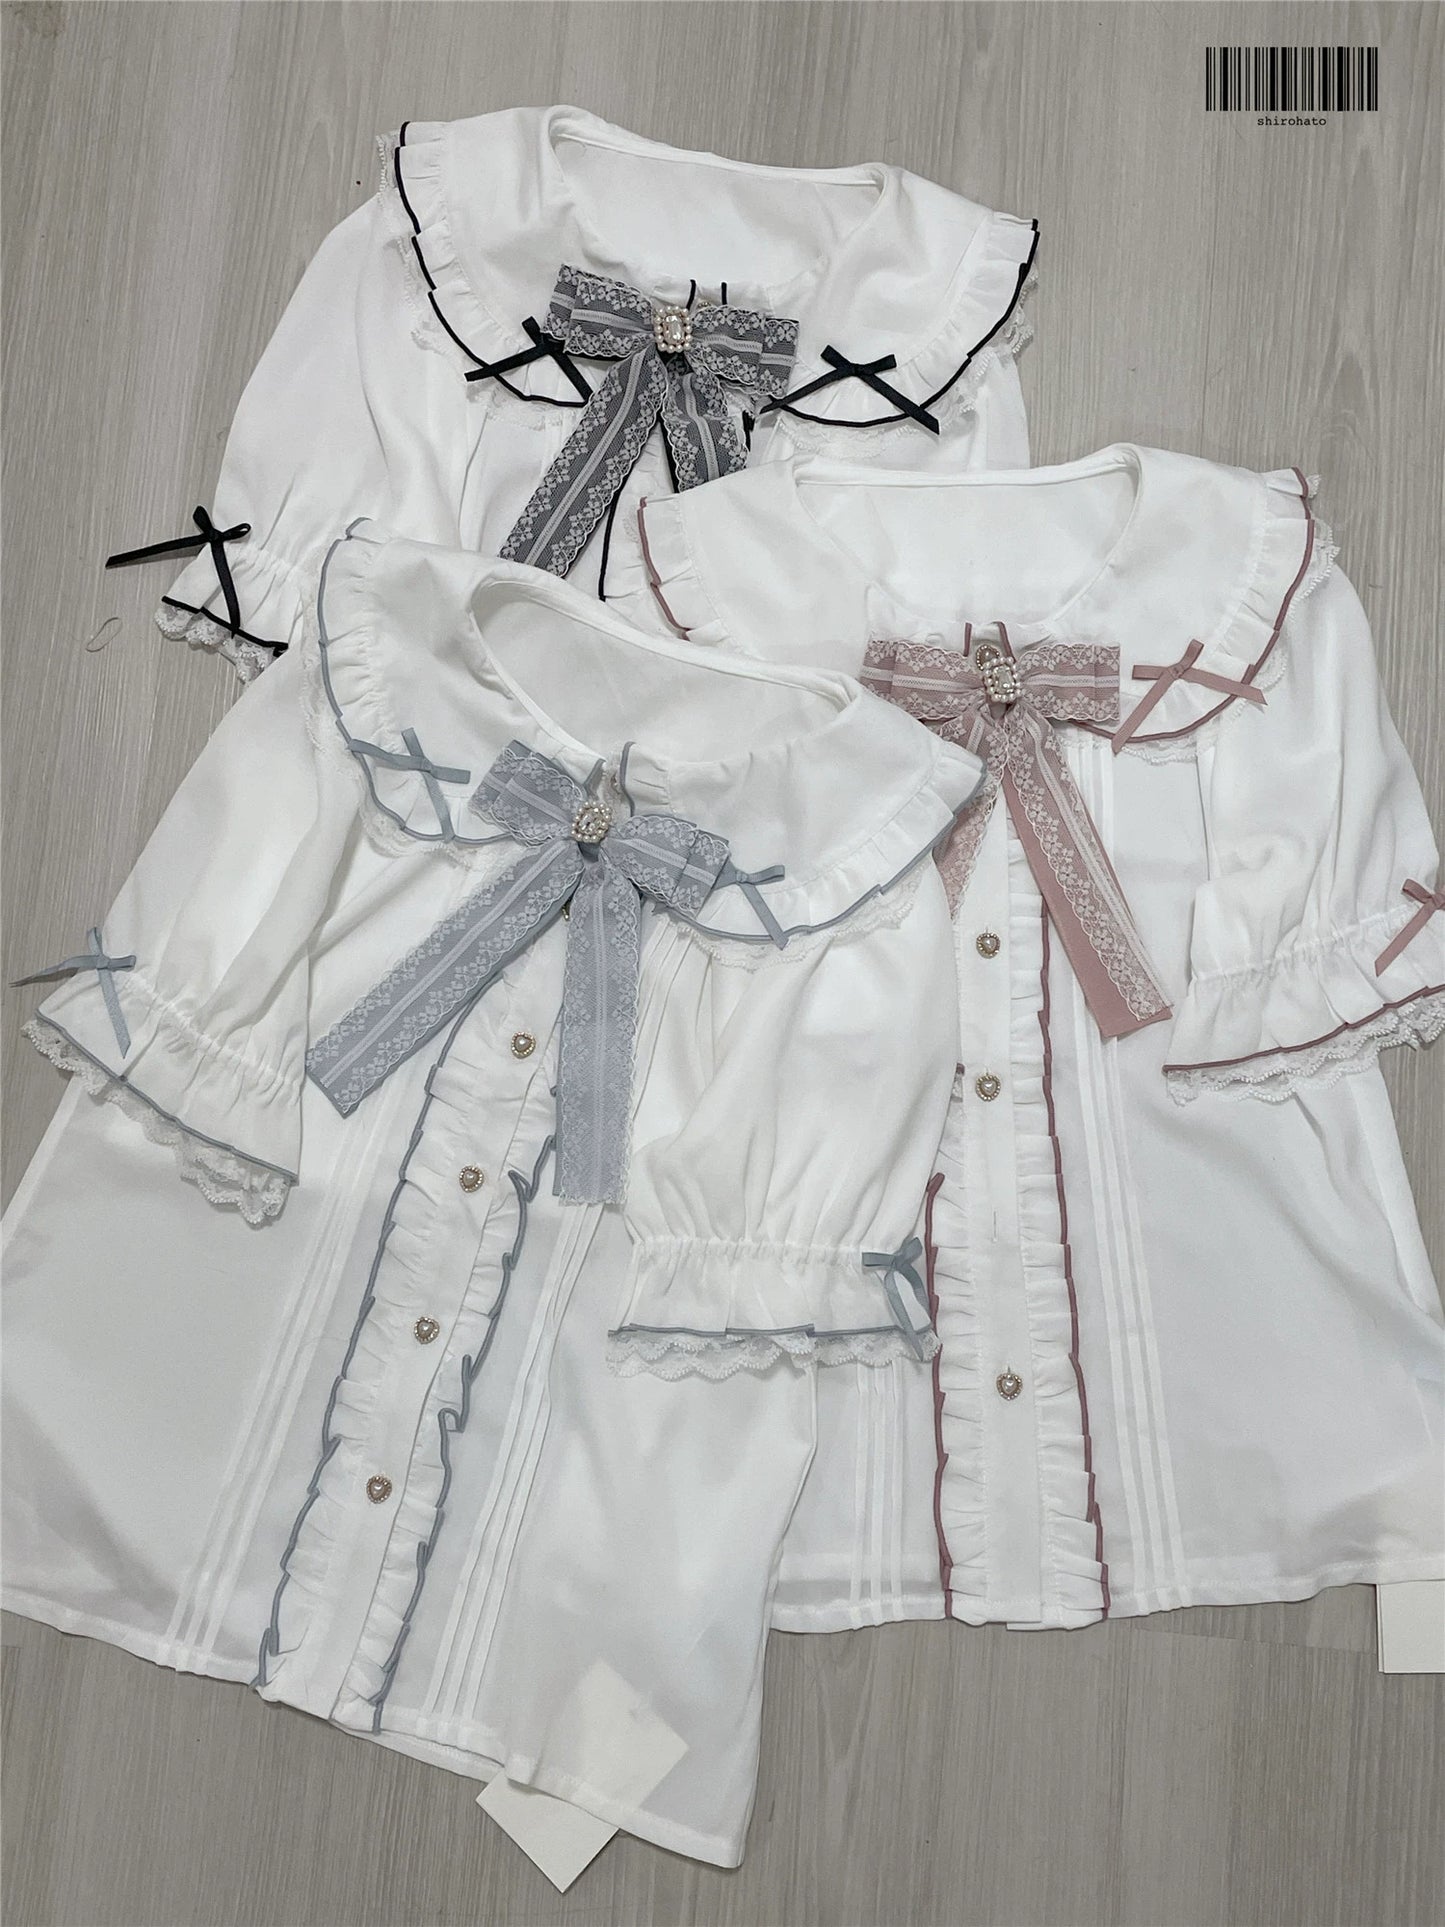 Jirai Kei Blouse Short Sleeve Shirt Ruffle Collar Top 37730:565612